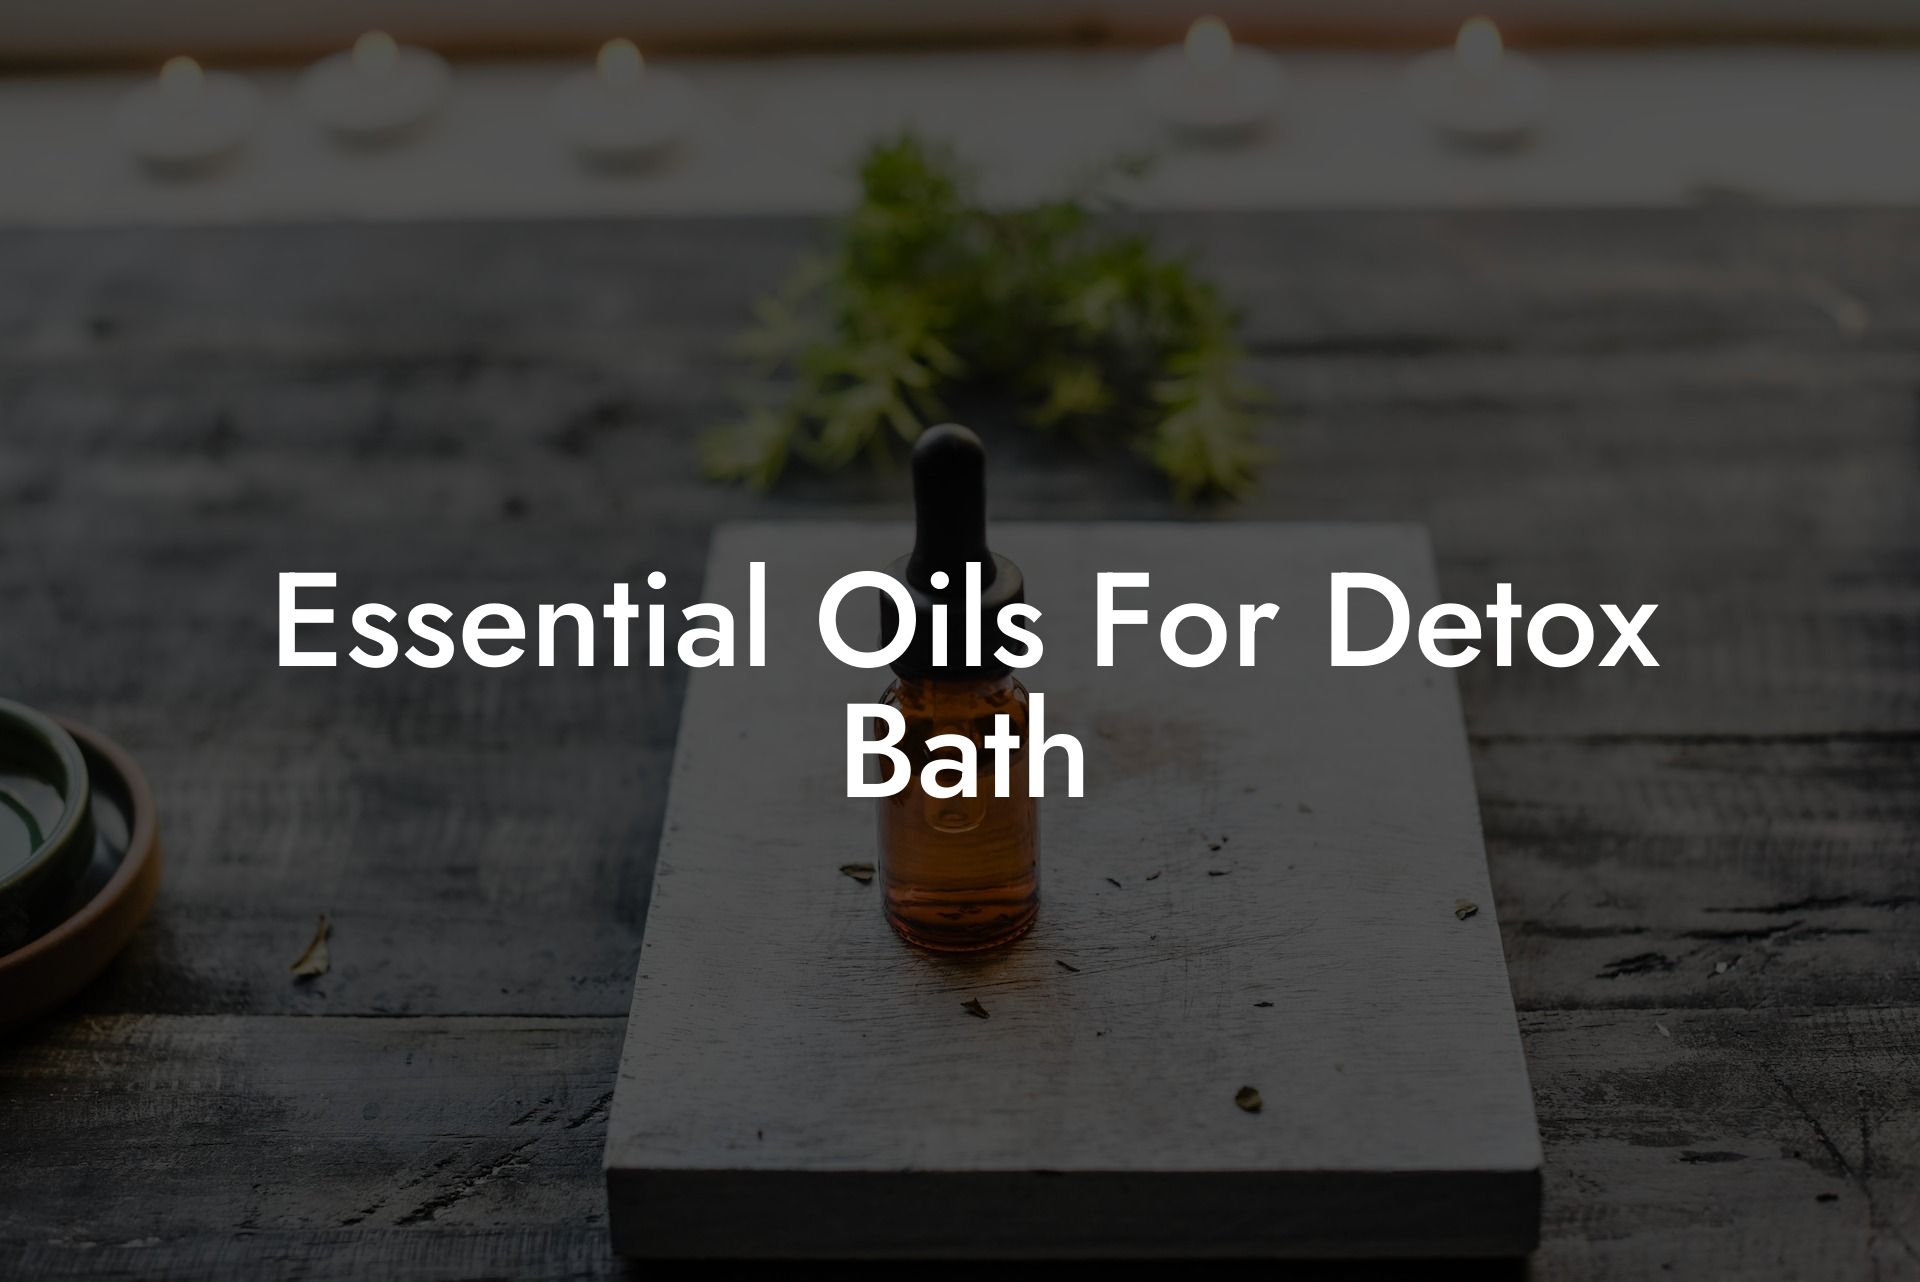 Essential Oils For Detox Bath